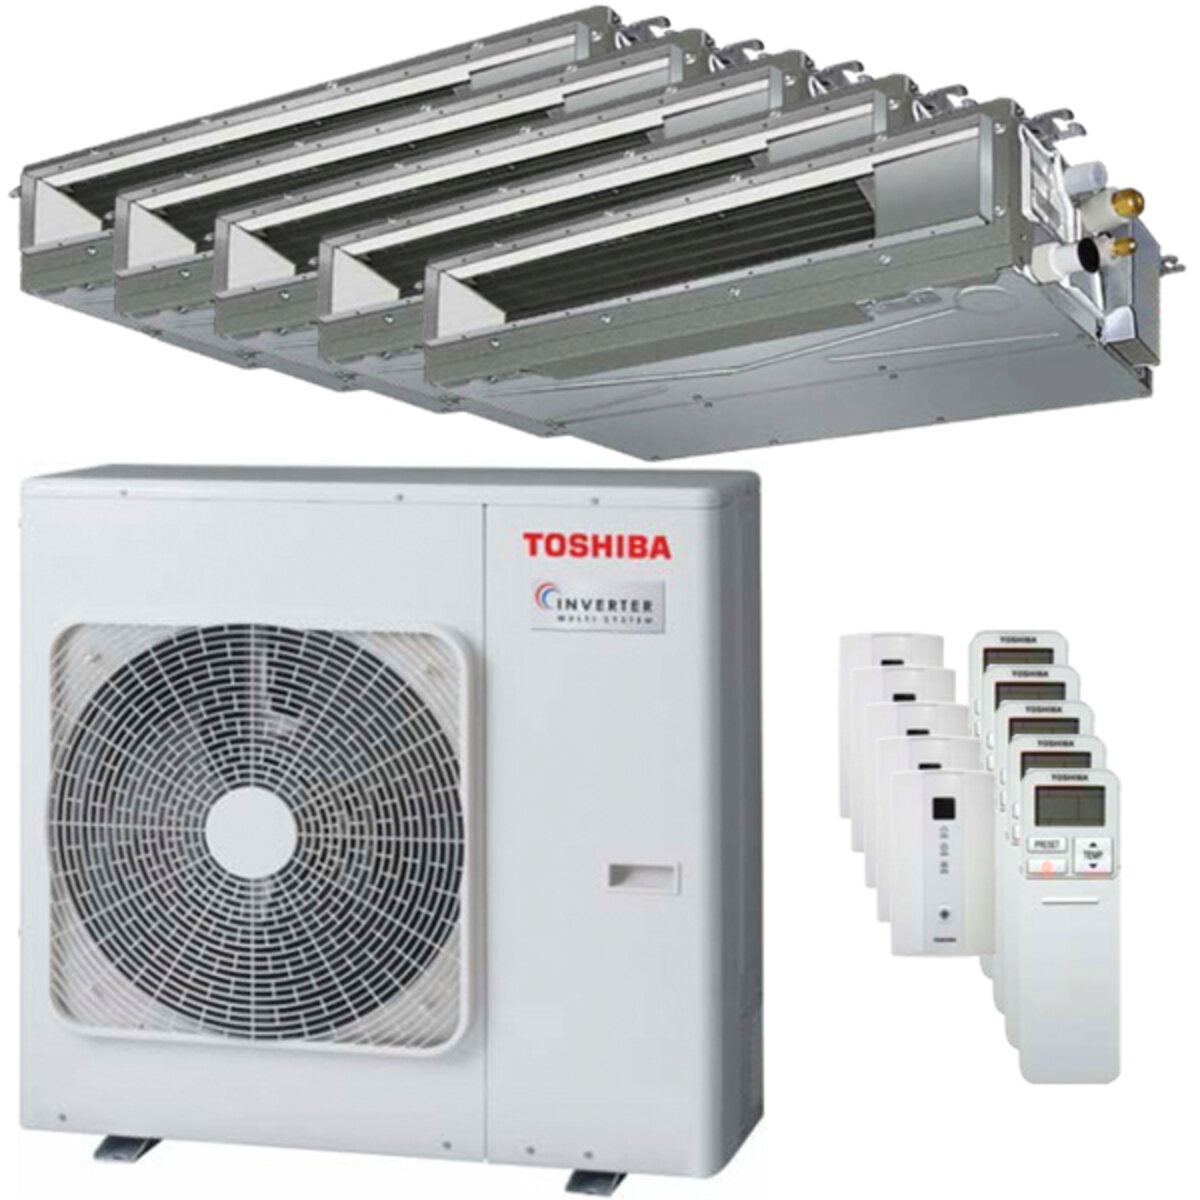 Toshiba Ductable Air Conditioner U2 penta split 7000 + 9000 + 9000 + 9000 + 16000 BTU inverter A ++ outdoor unit 10.0 kW